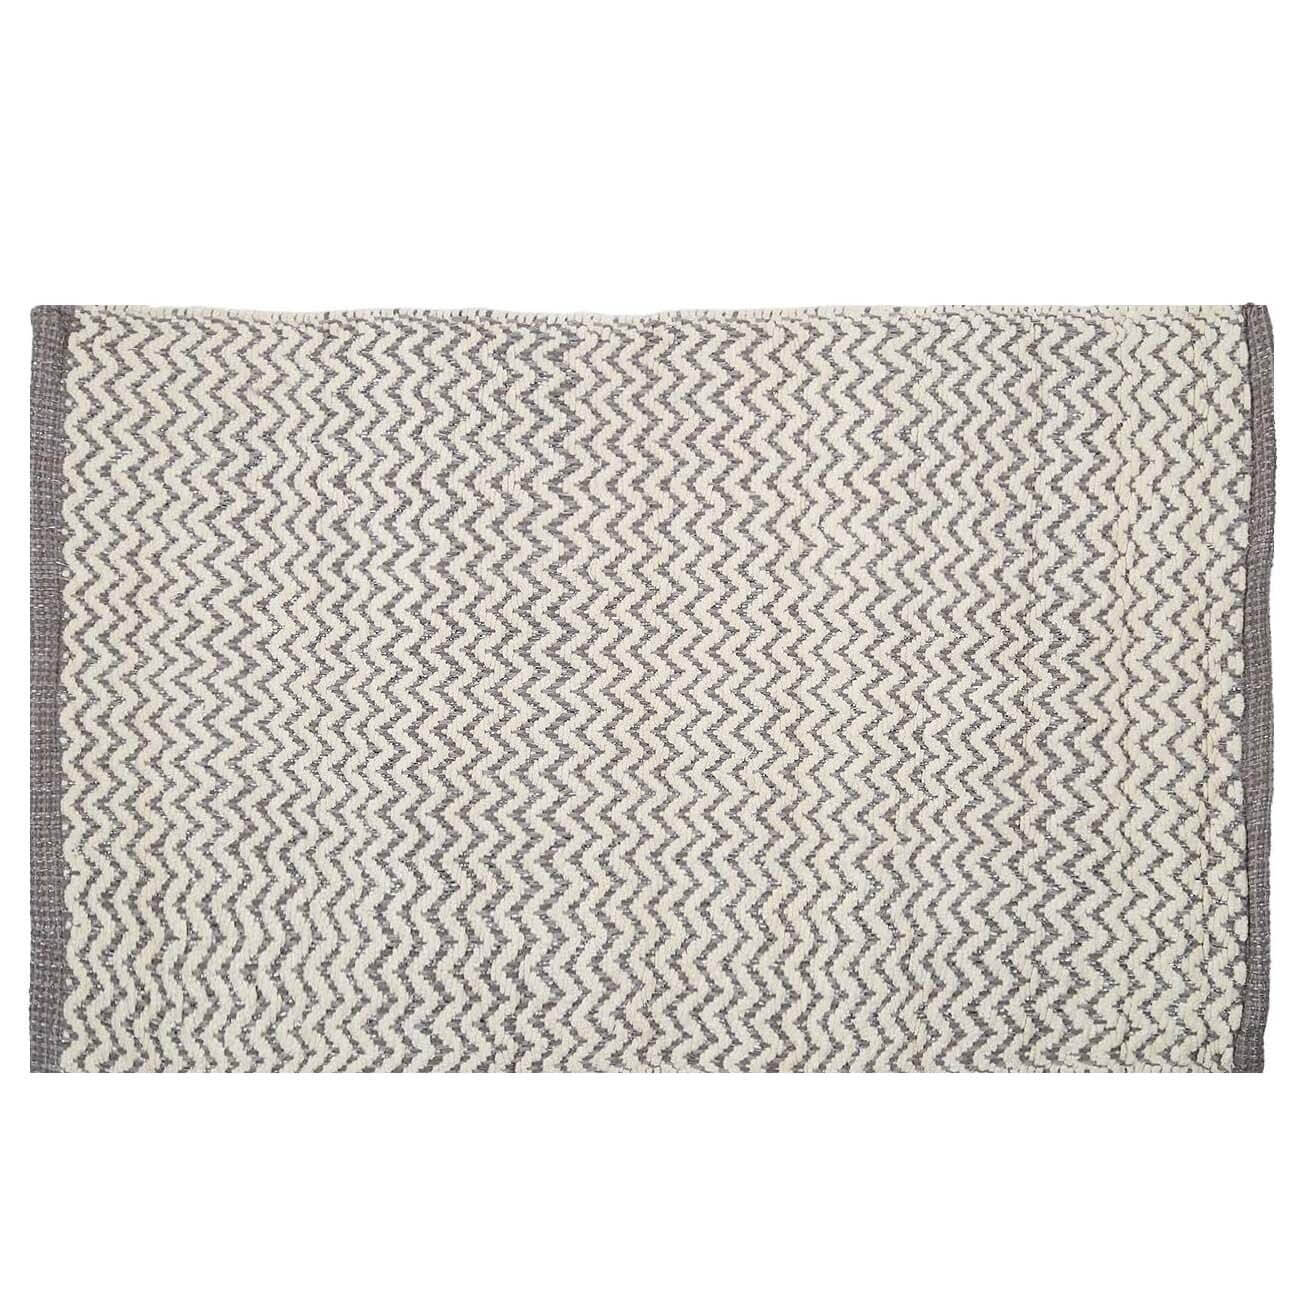 Коврик, 50х80 см, хлопок, бело-серый, Зигзаги с люрексом, Shiny threads trixie коврик под миску milk